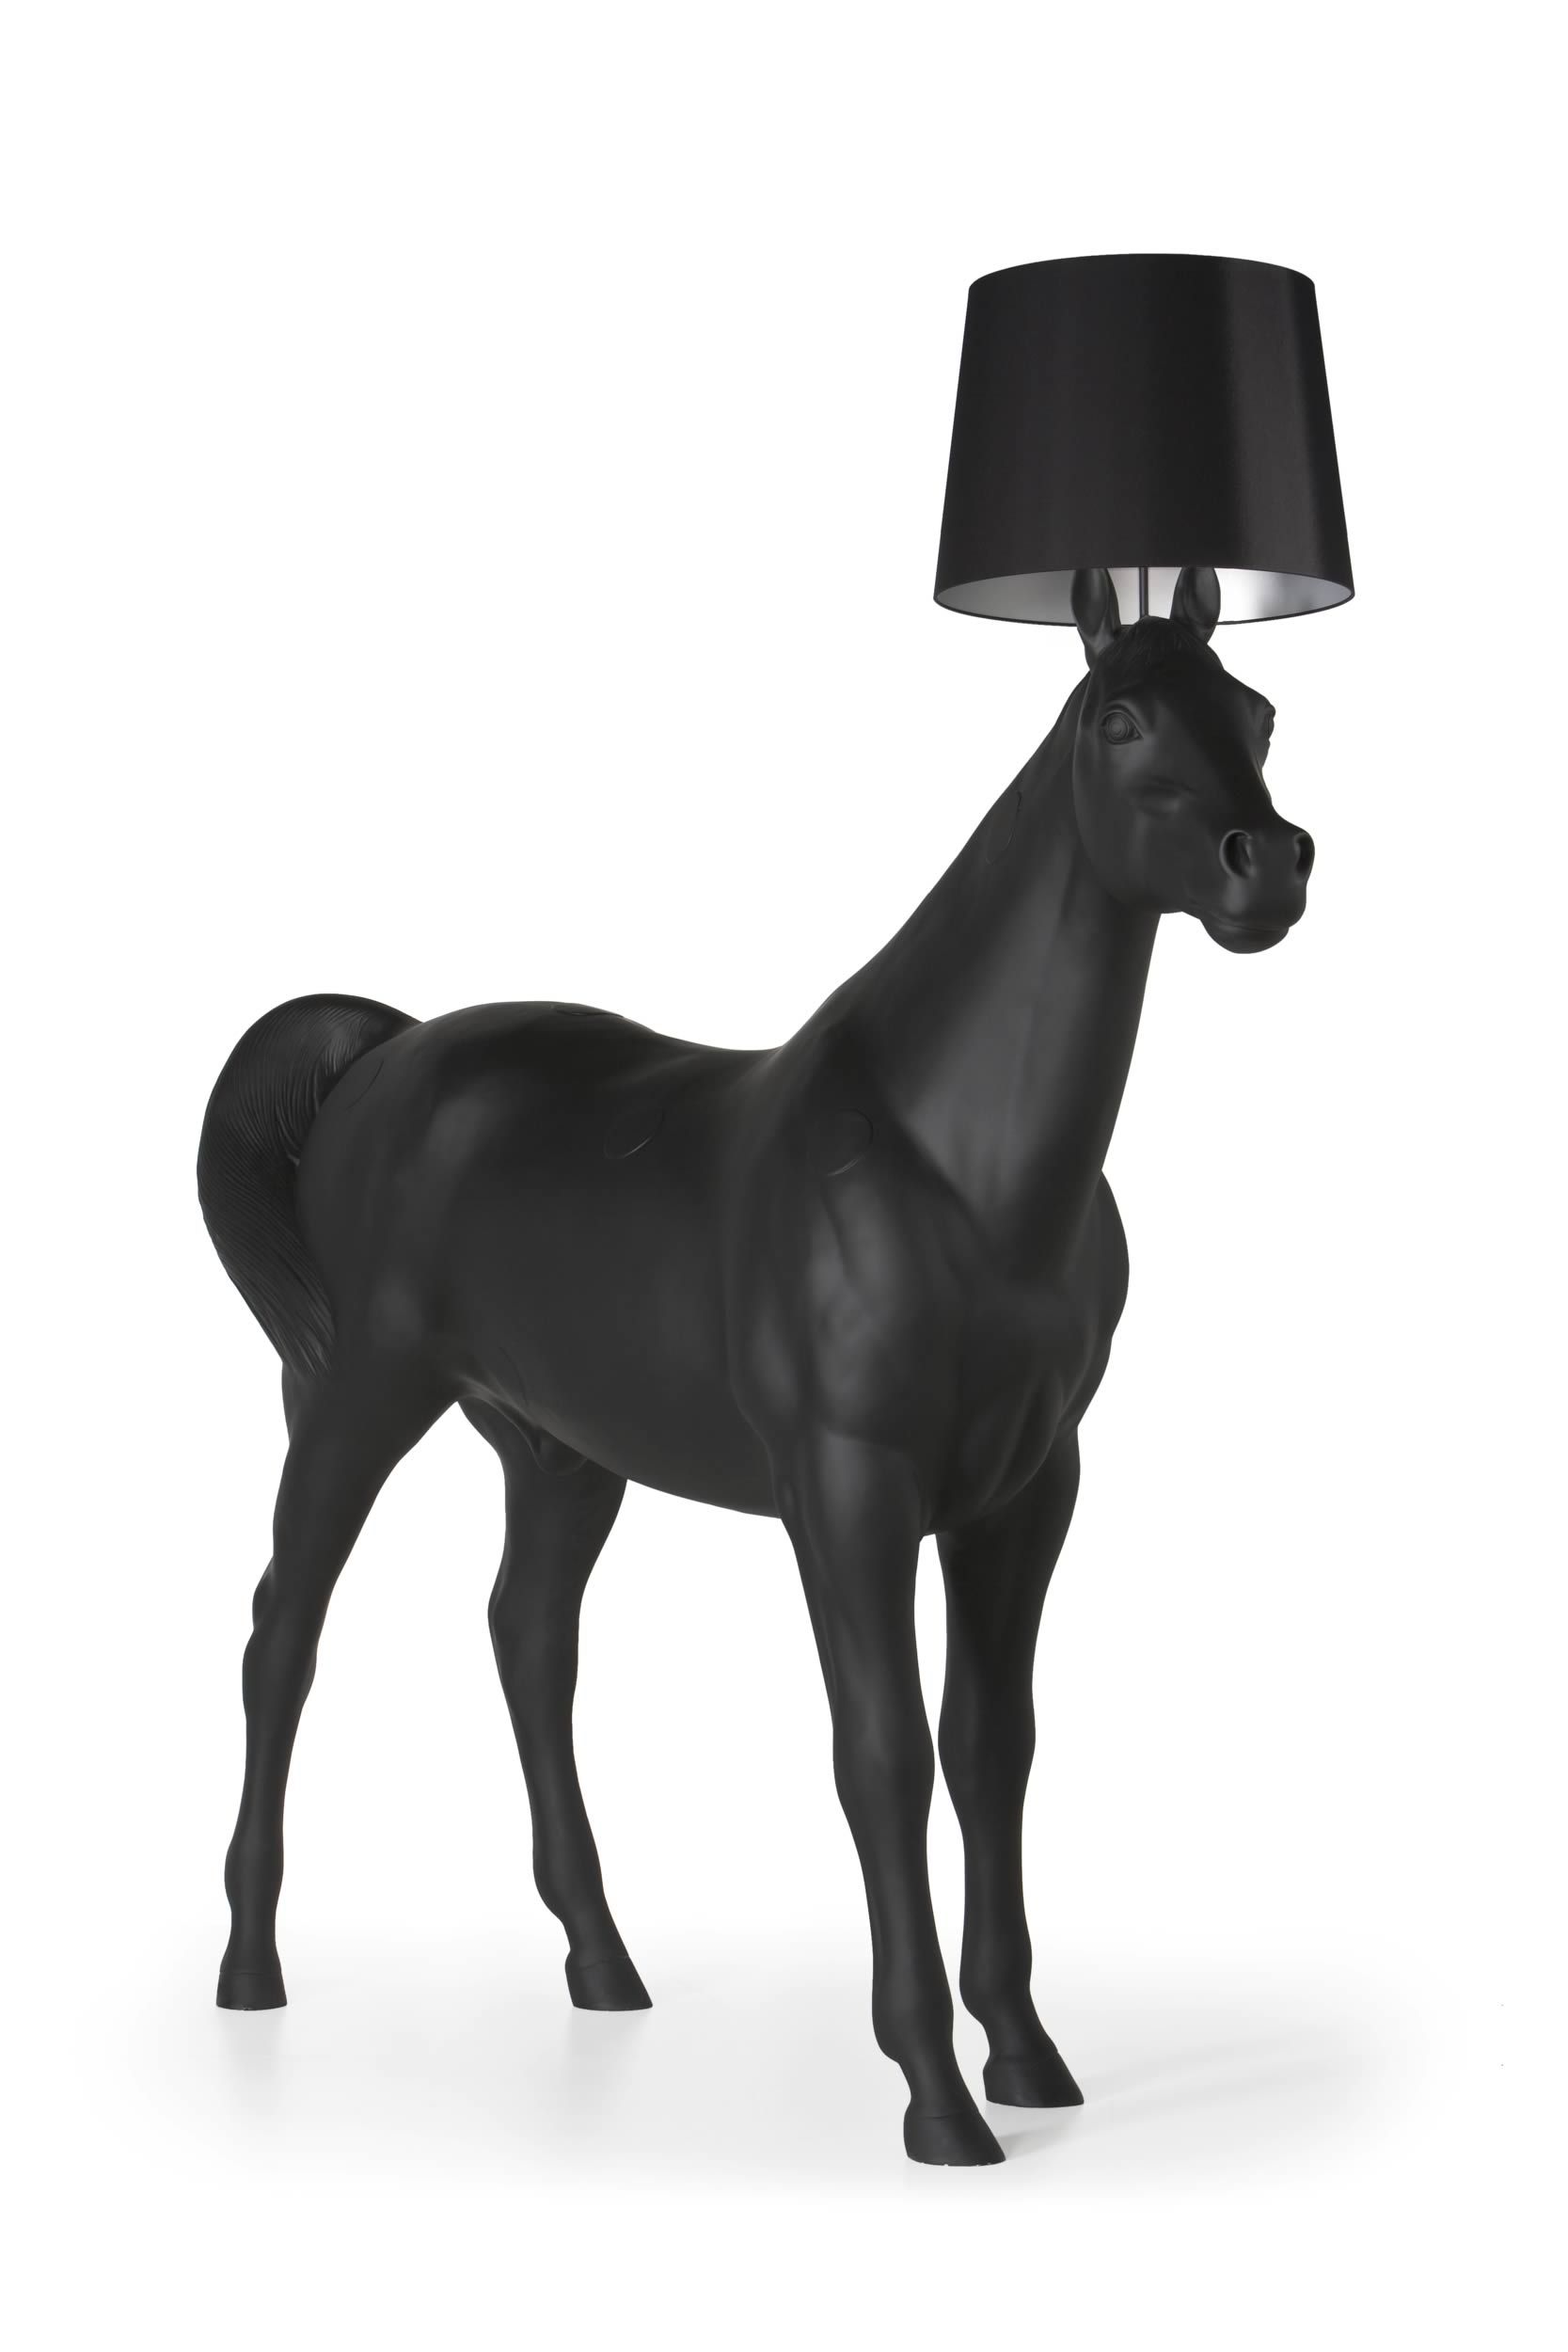 horselamp